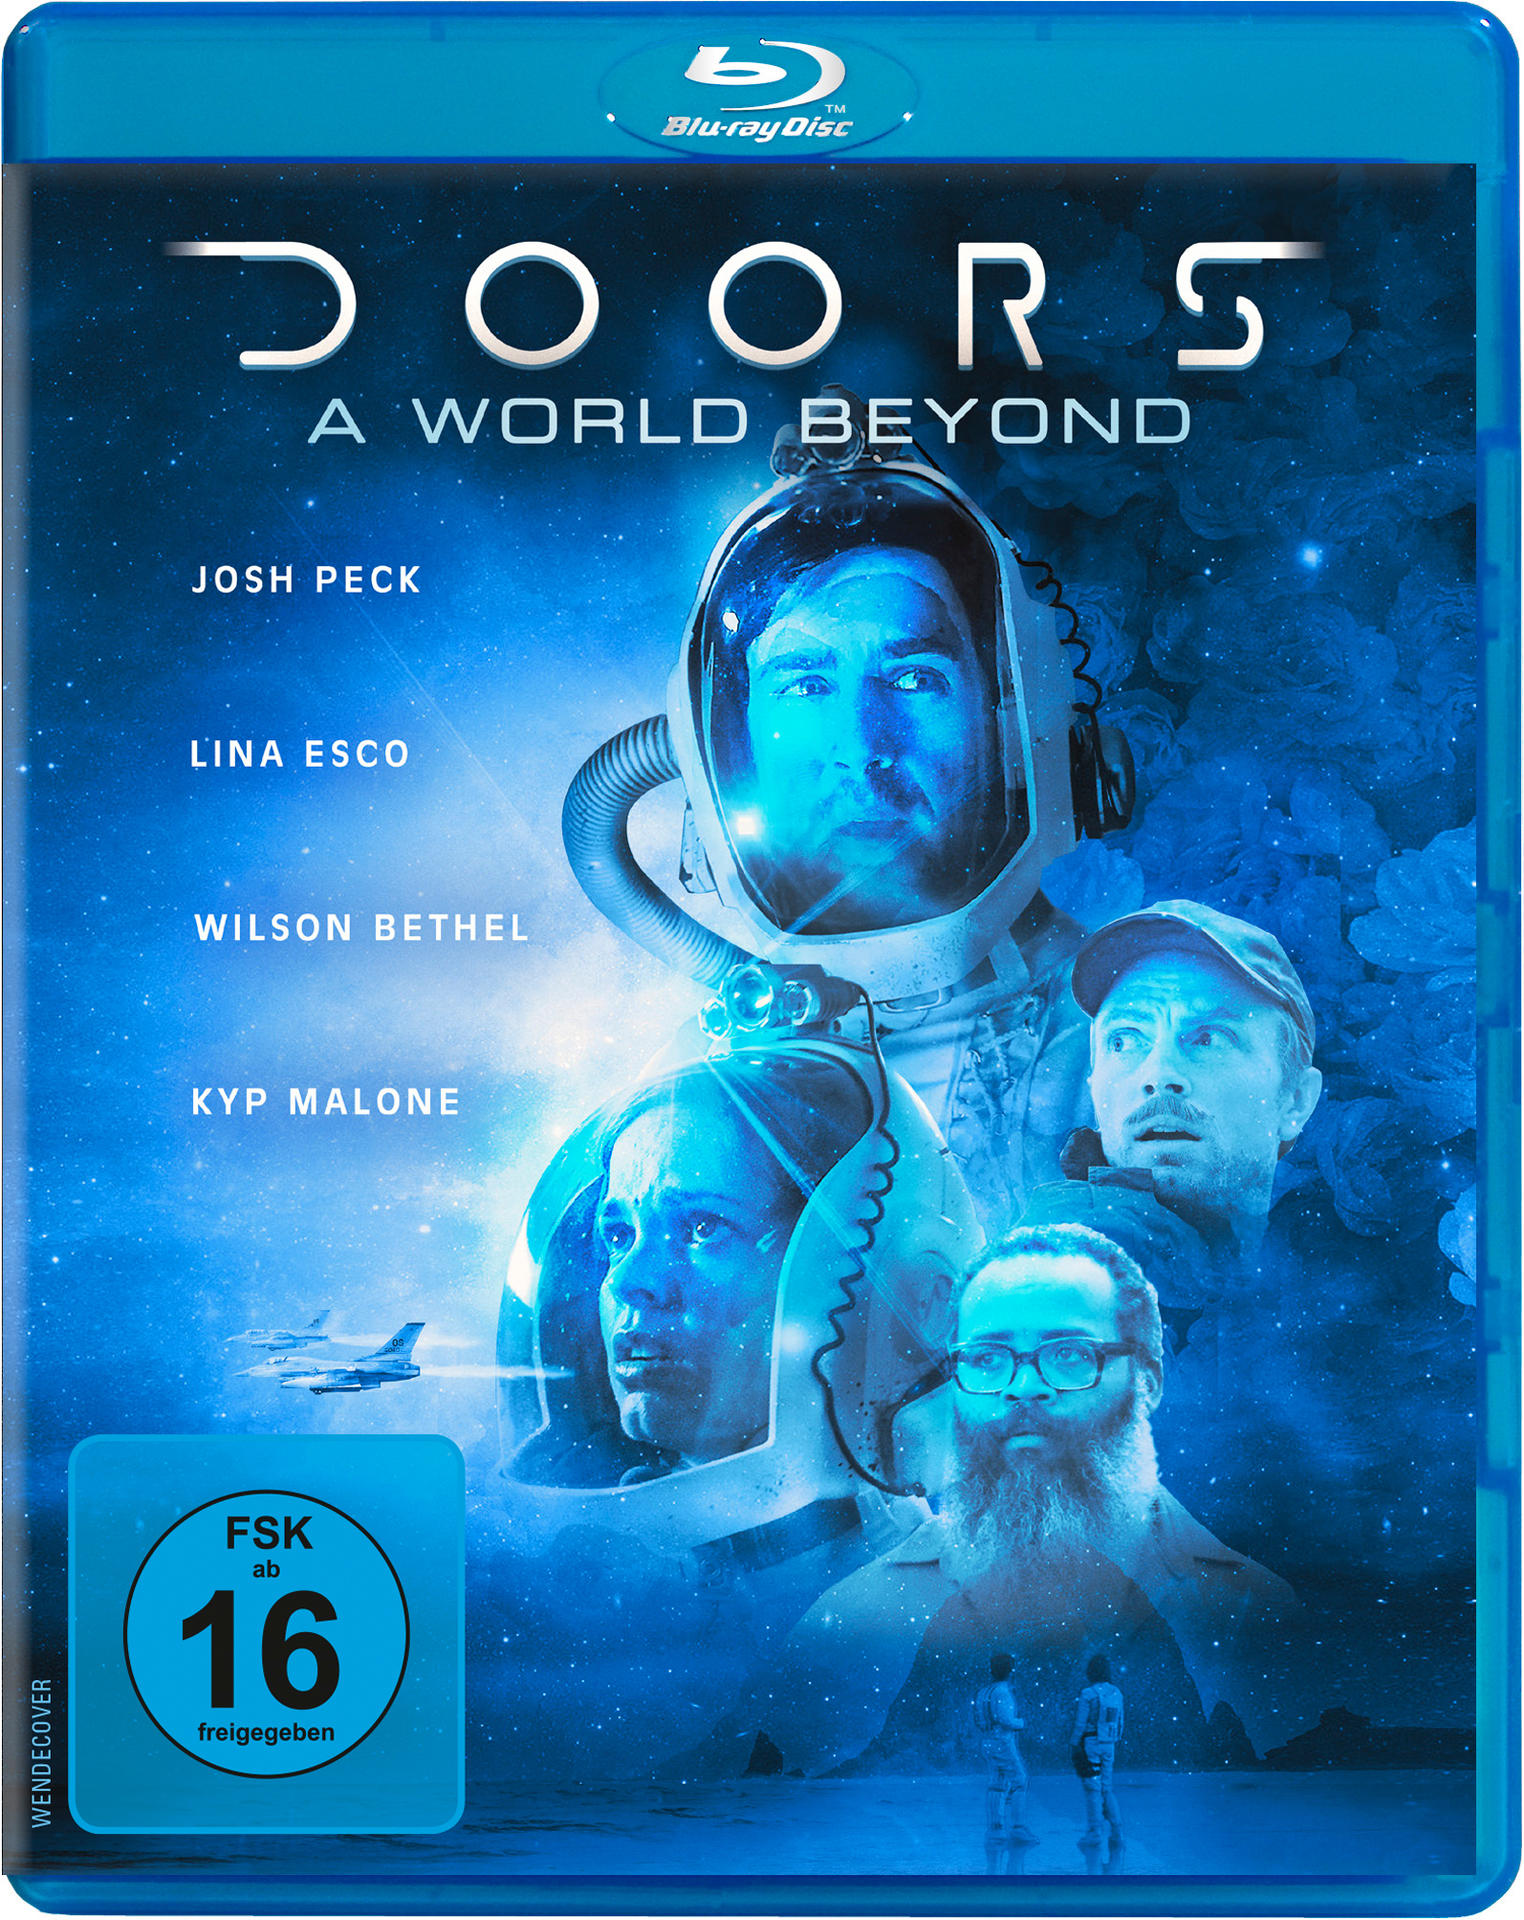 A Blu-ray World Beyond Doors -